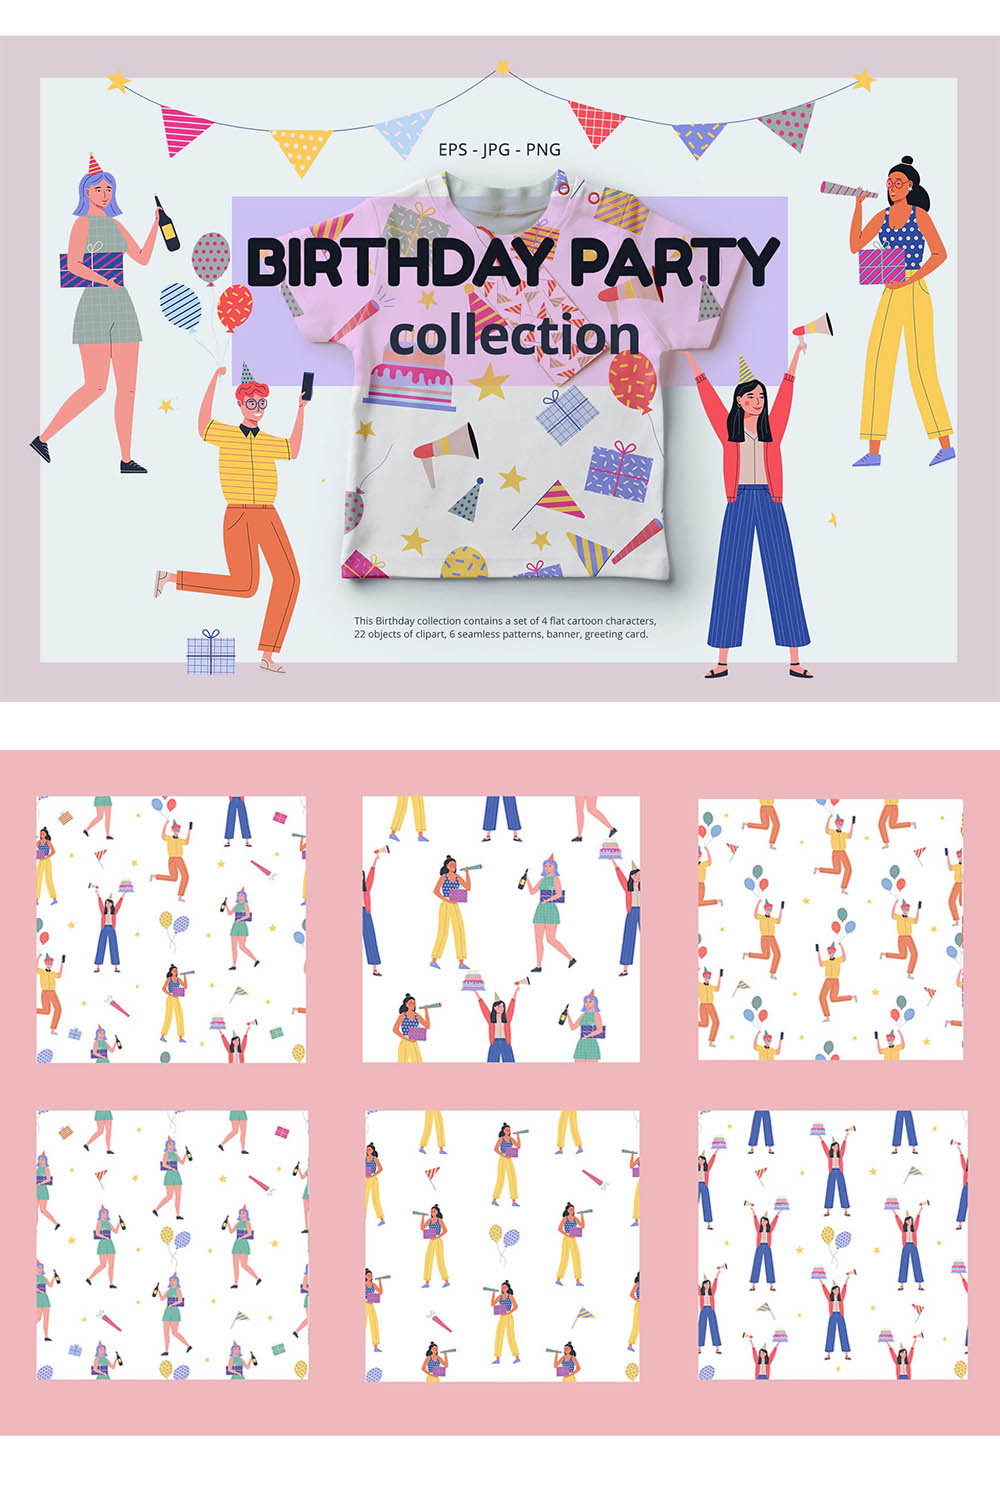 Birthday Party Cartoon Collection pinterest.